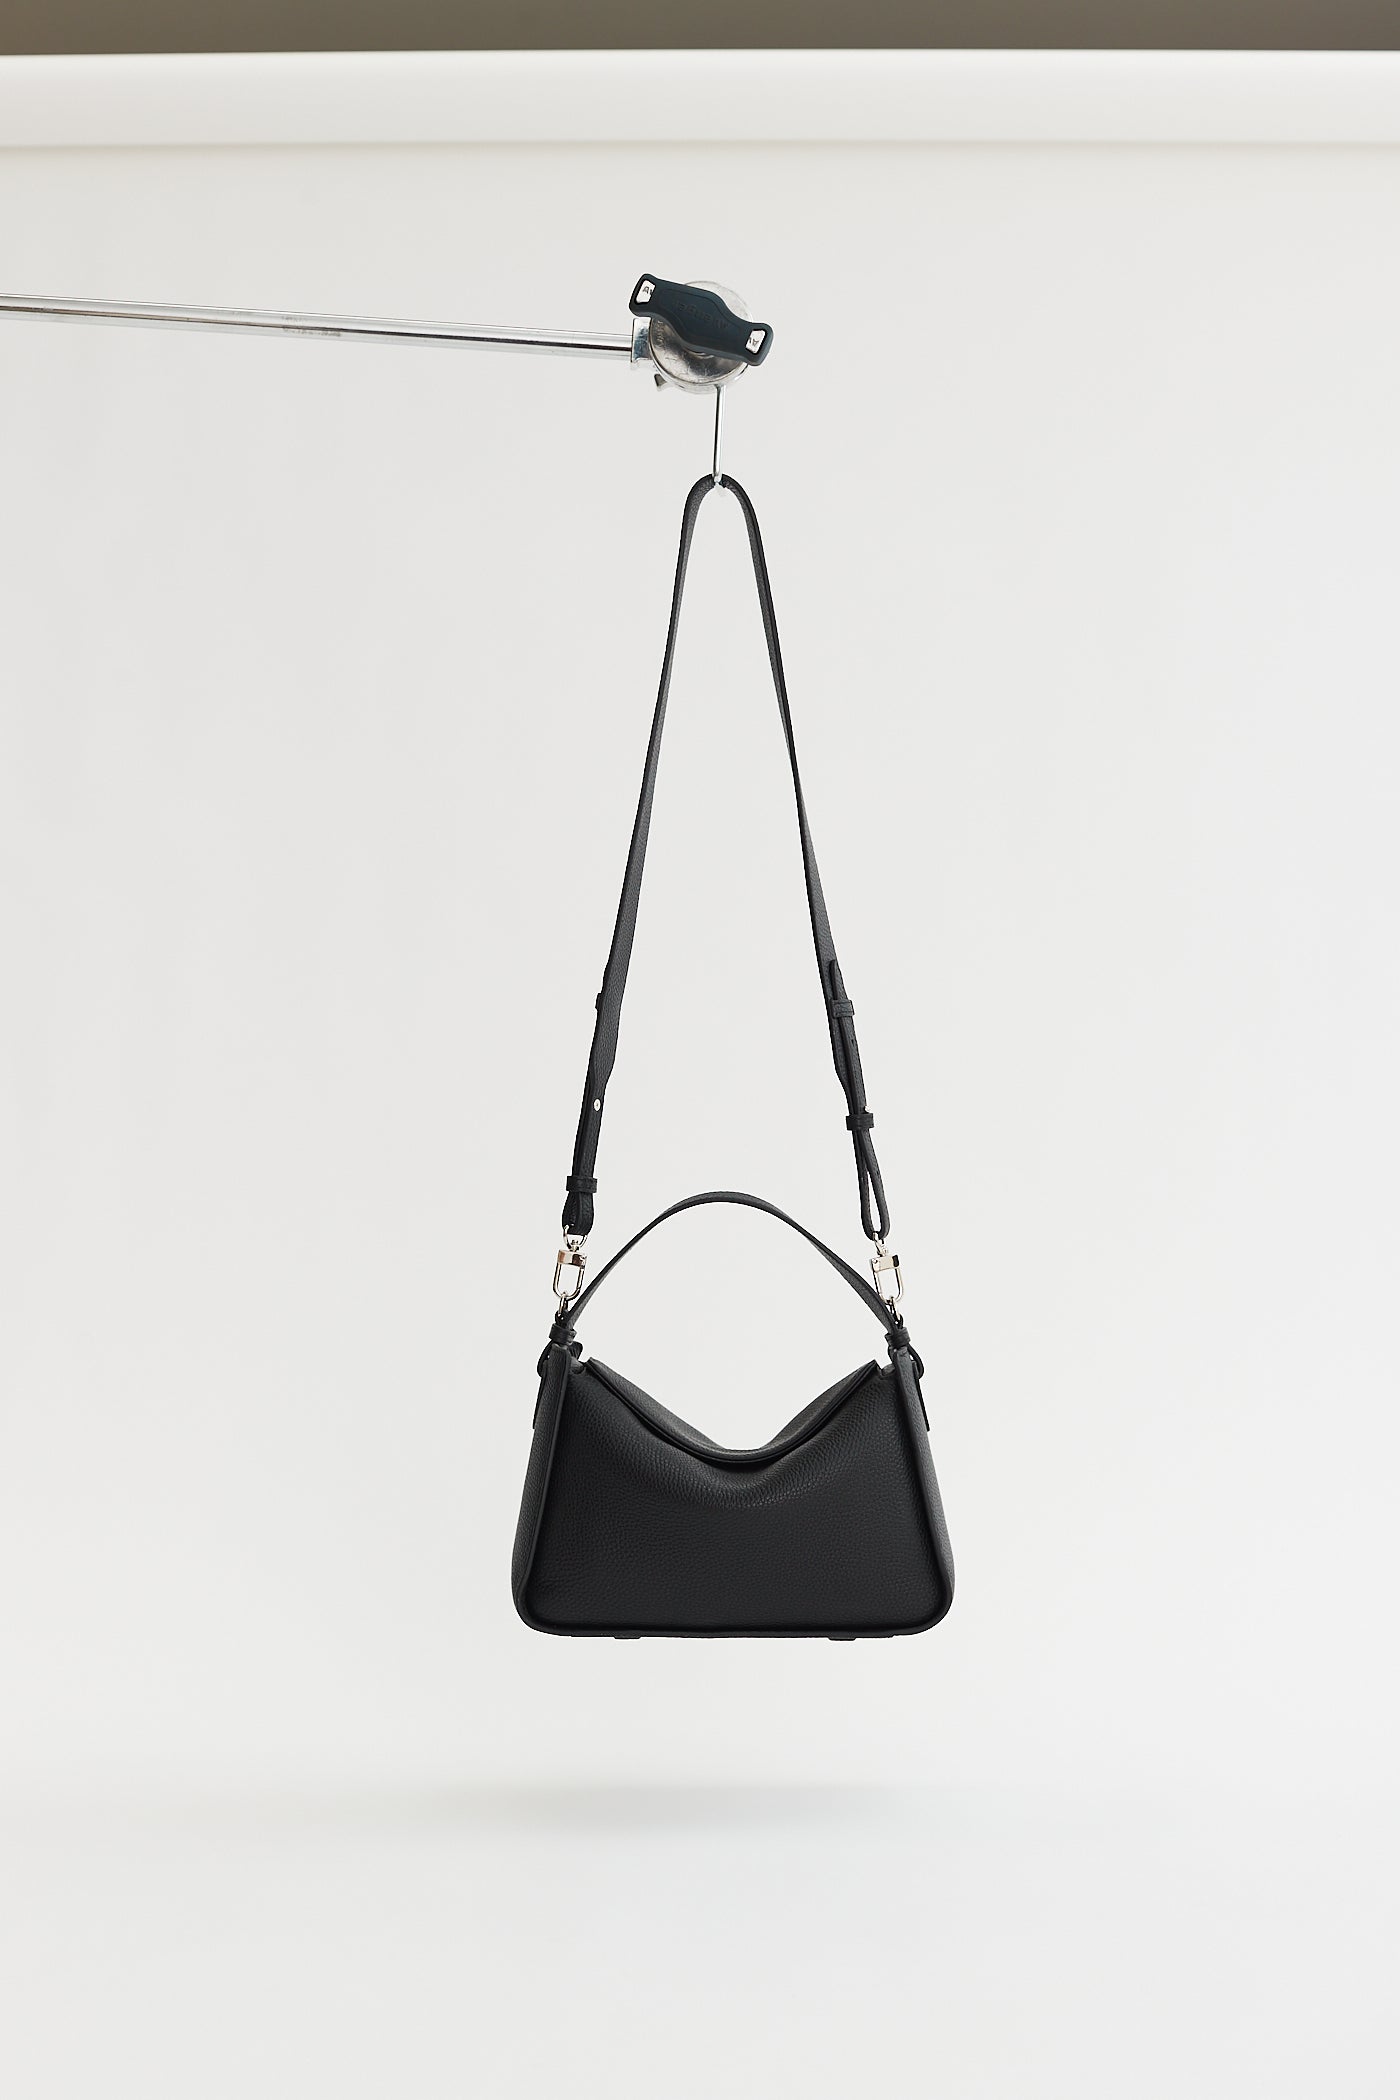 Clementine Bag: Black Pebbled Leather